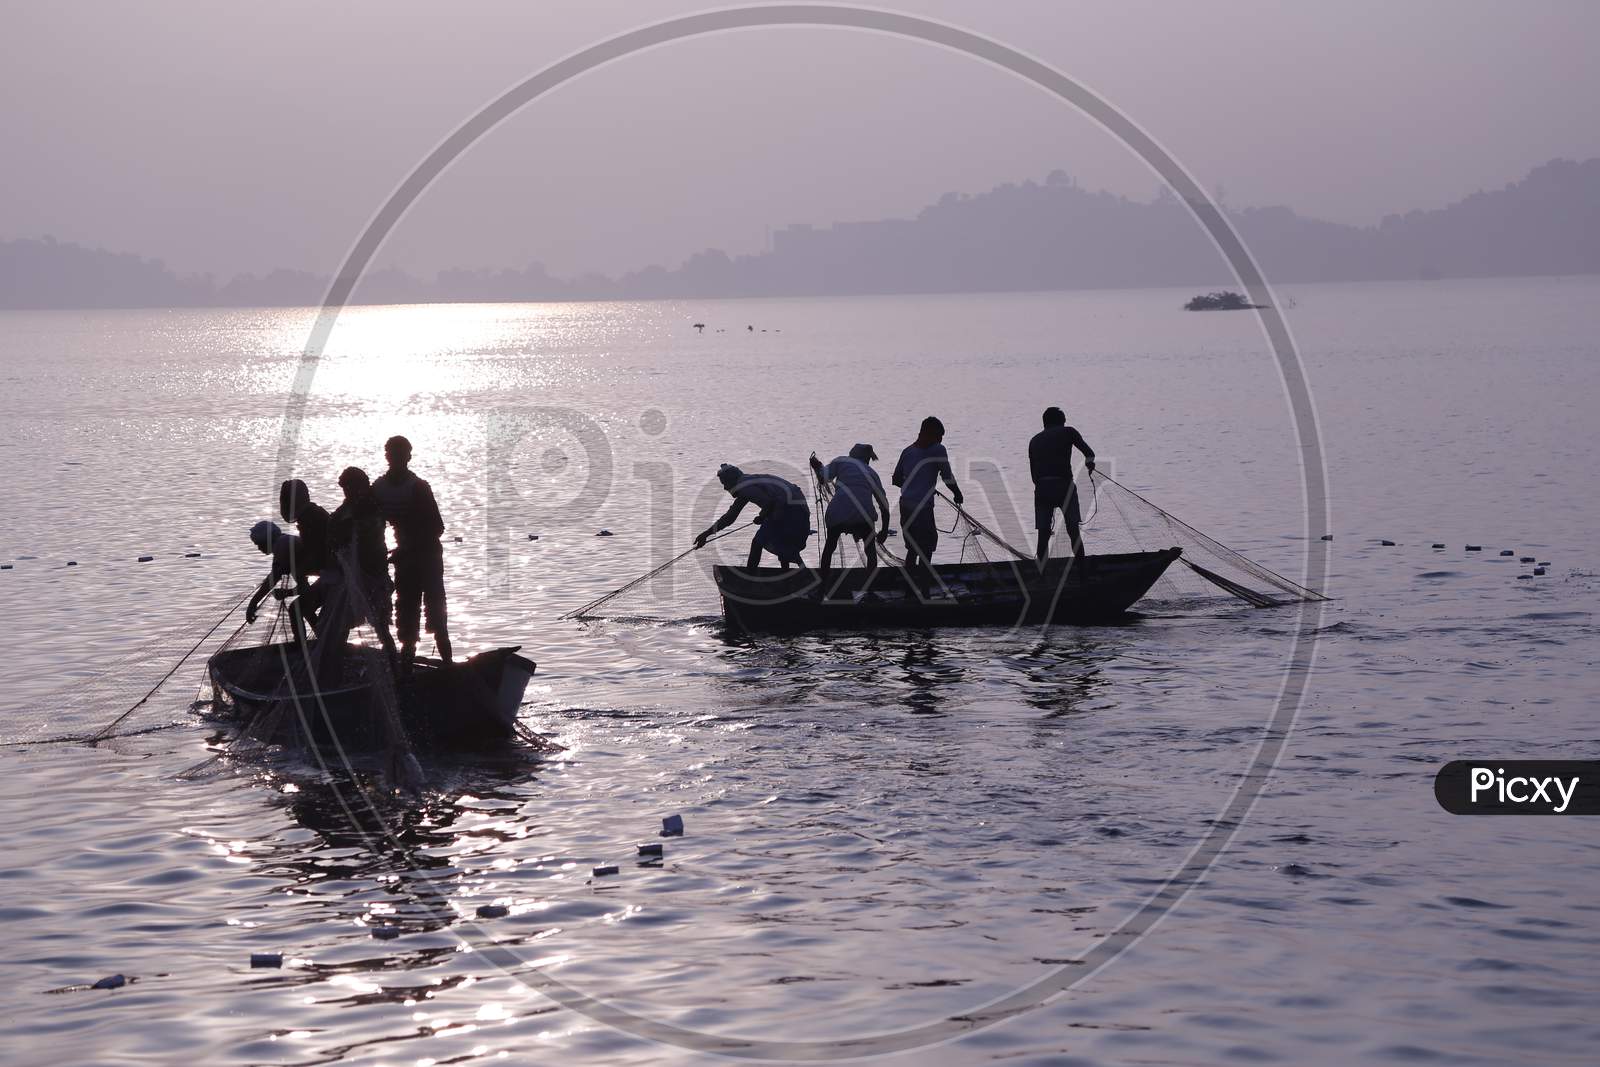 Indian Fishermen Catch Fishes In Anasagar Lake In Ajmer, Rajasthan, India.